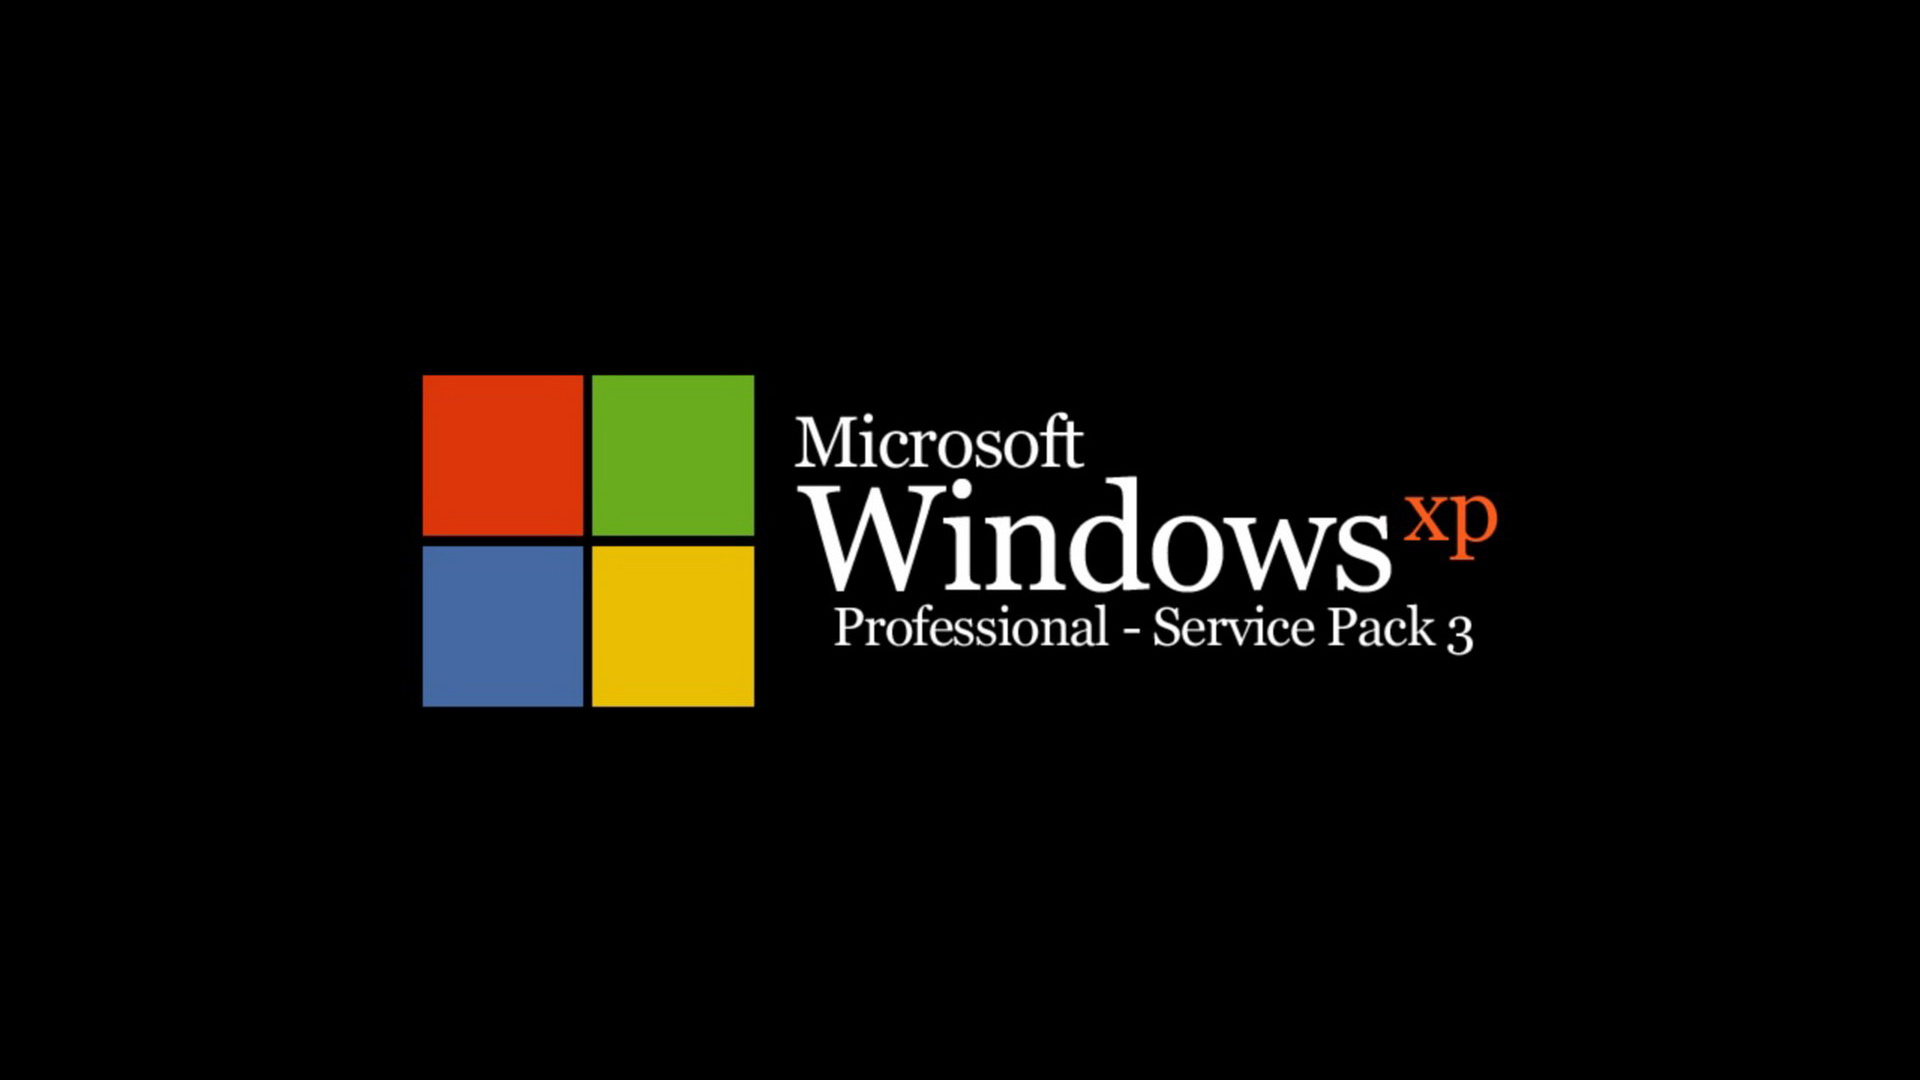 Windows Xp, Microsoft Windows, Logotipo, Texto, Diseño Gráfico. Wallpaper in 1920x1080 Resolution